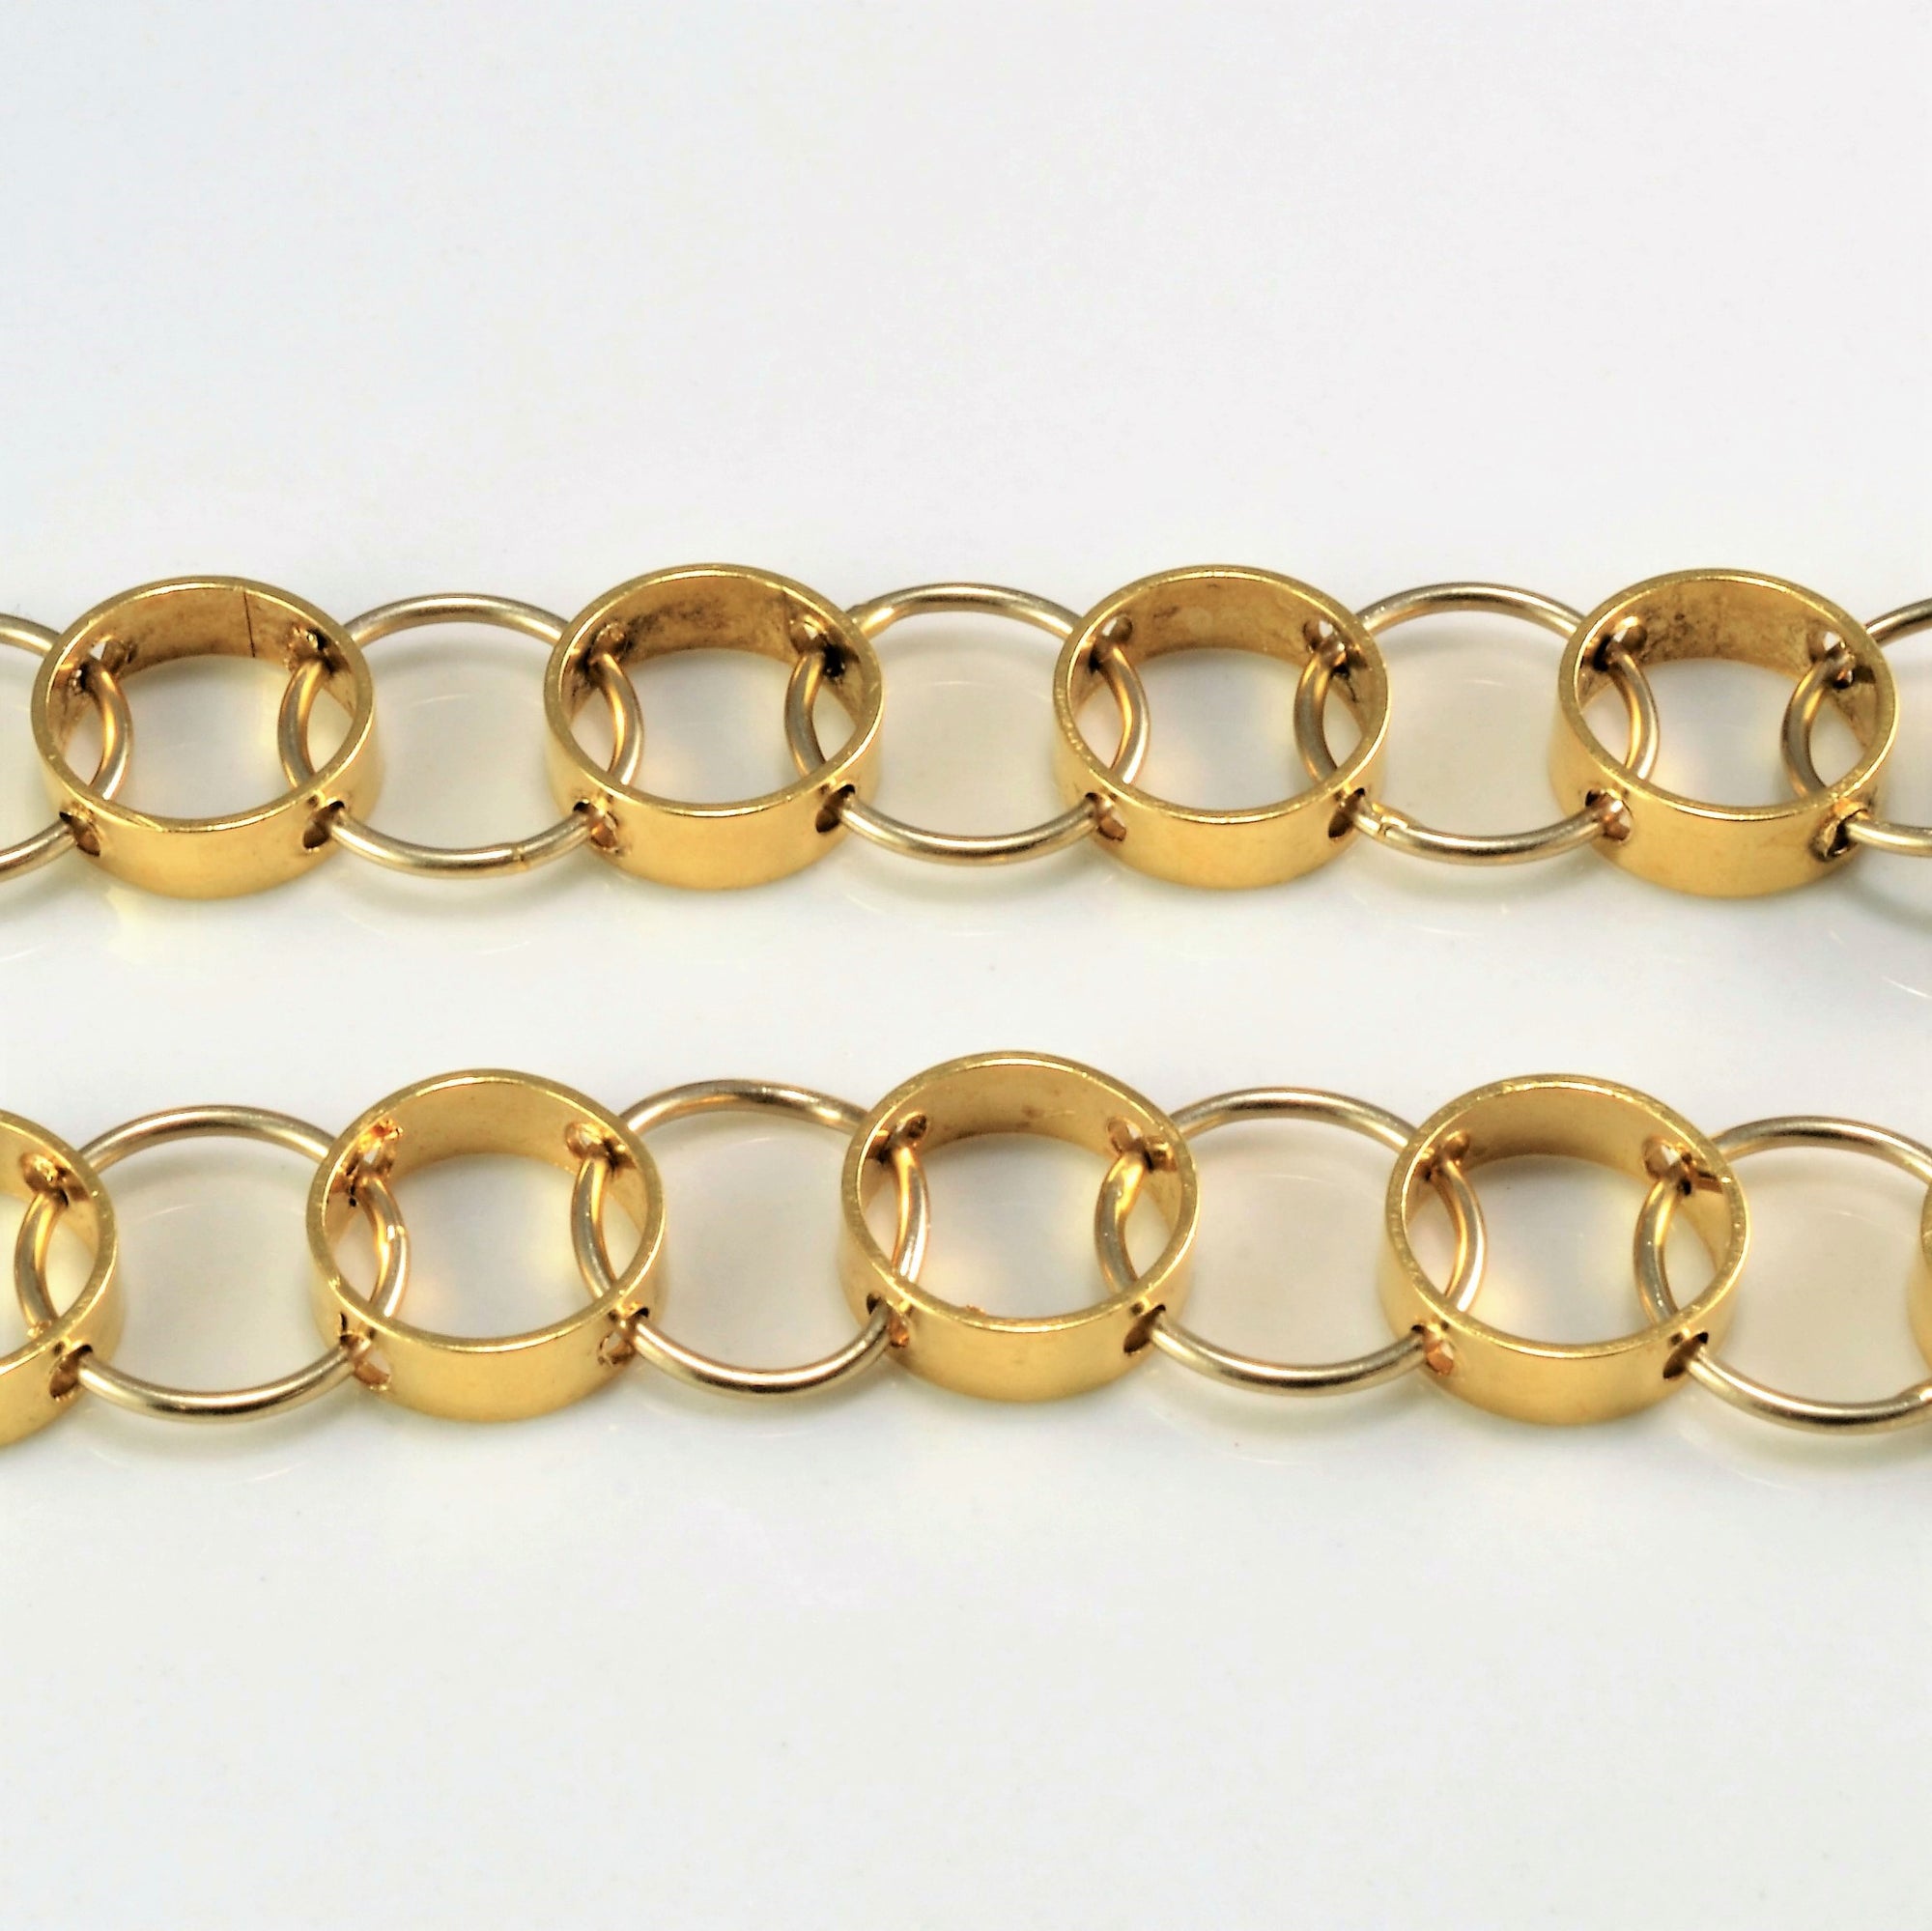 Two Tone Gold Rolo Chain Bracelet | 7.5''|